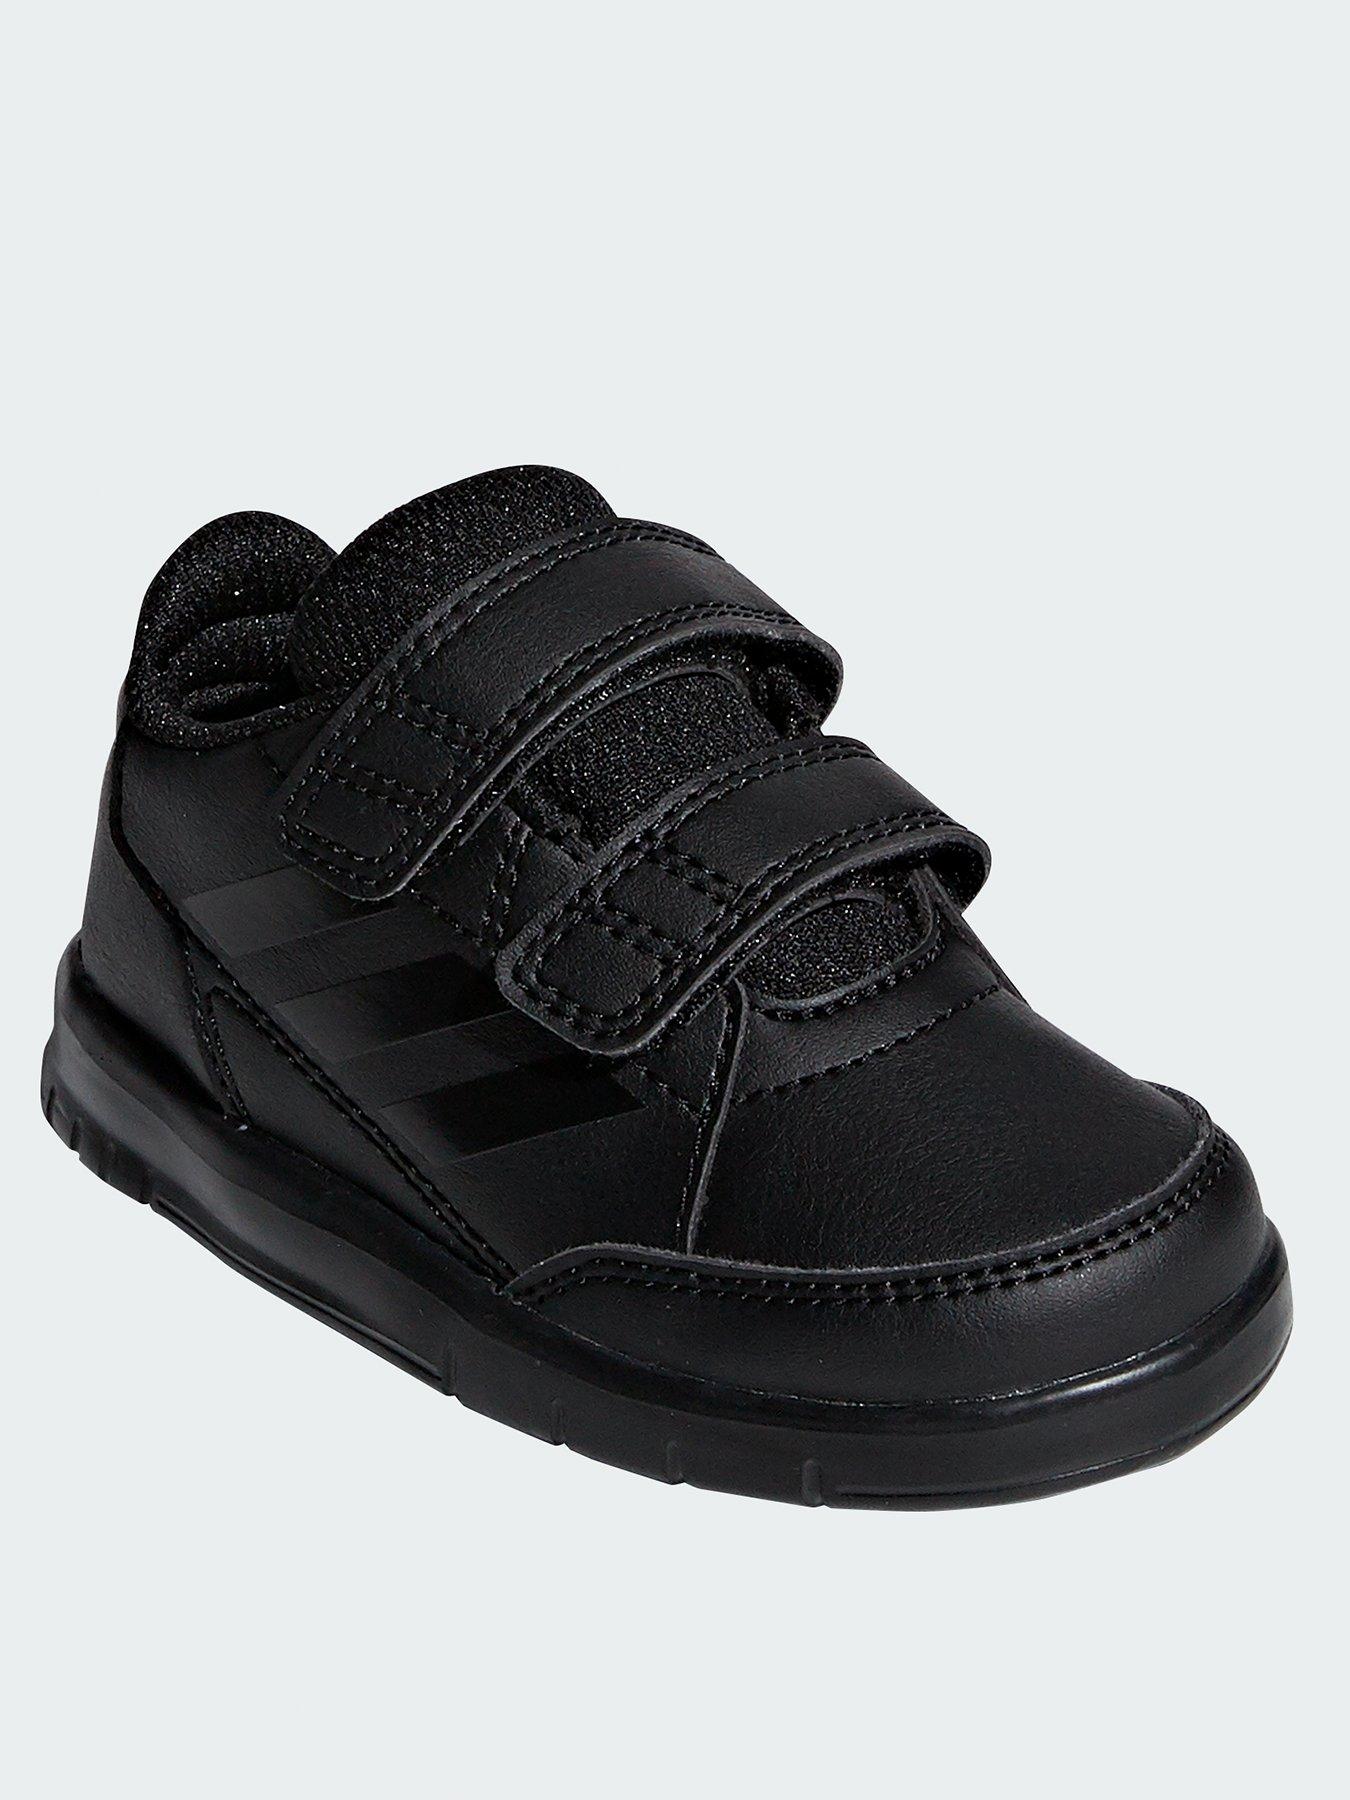 altasport shoes black